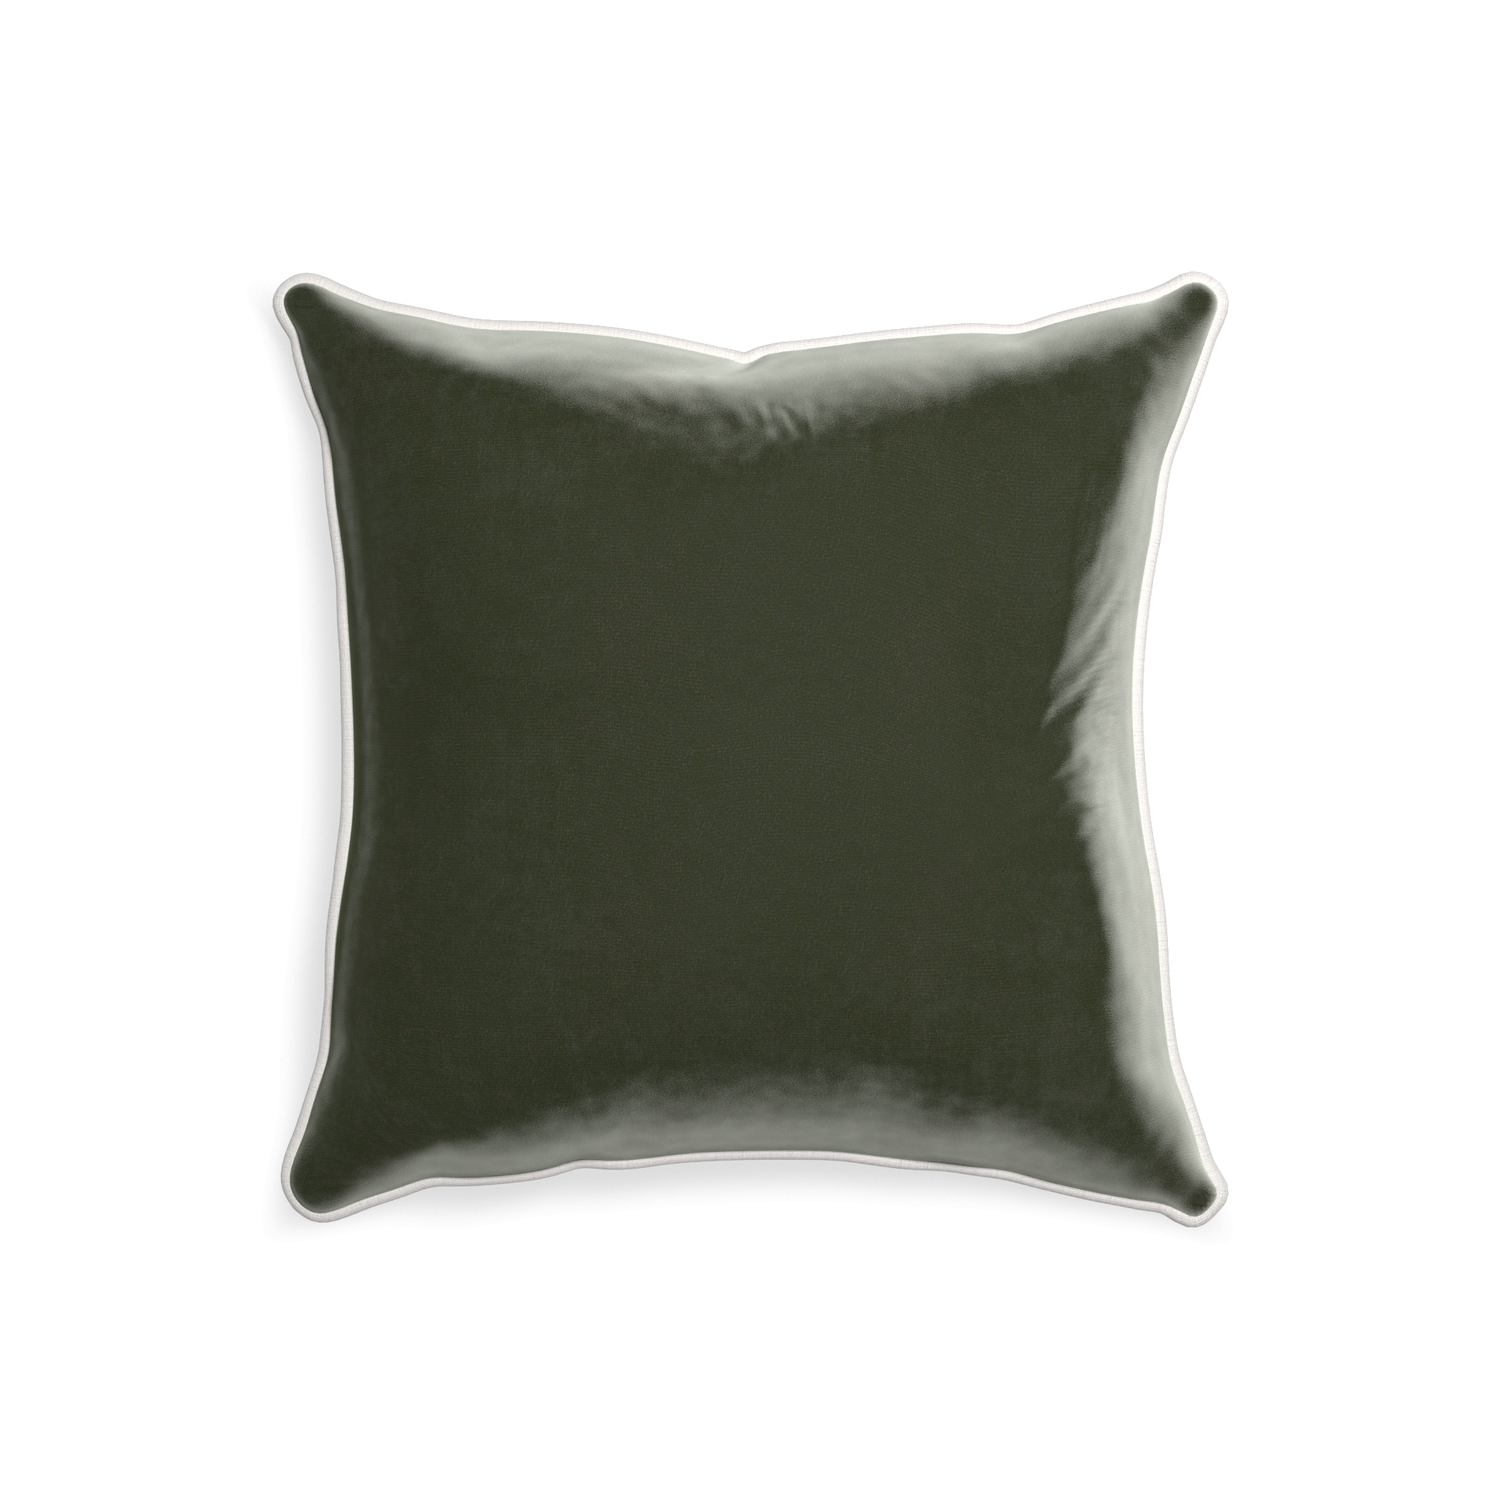 20-square fern velvet custom pillow with snow piping on white background